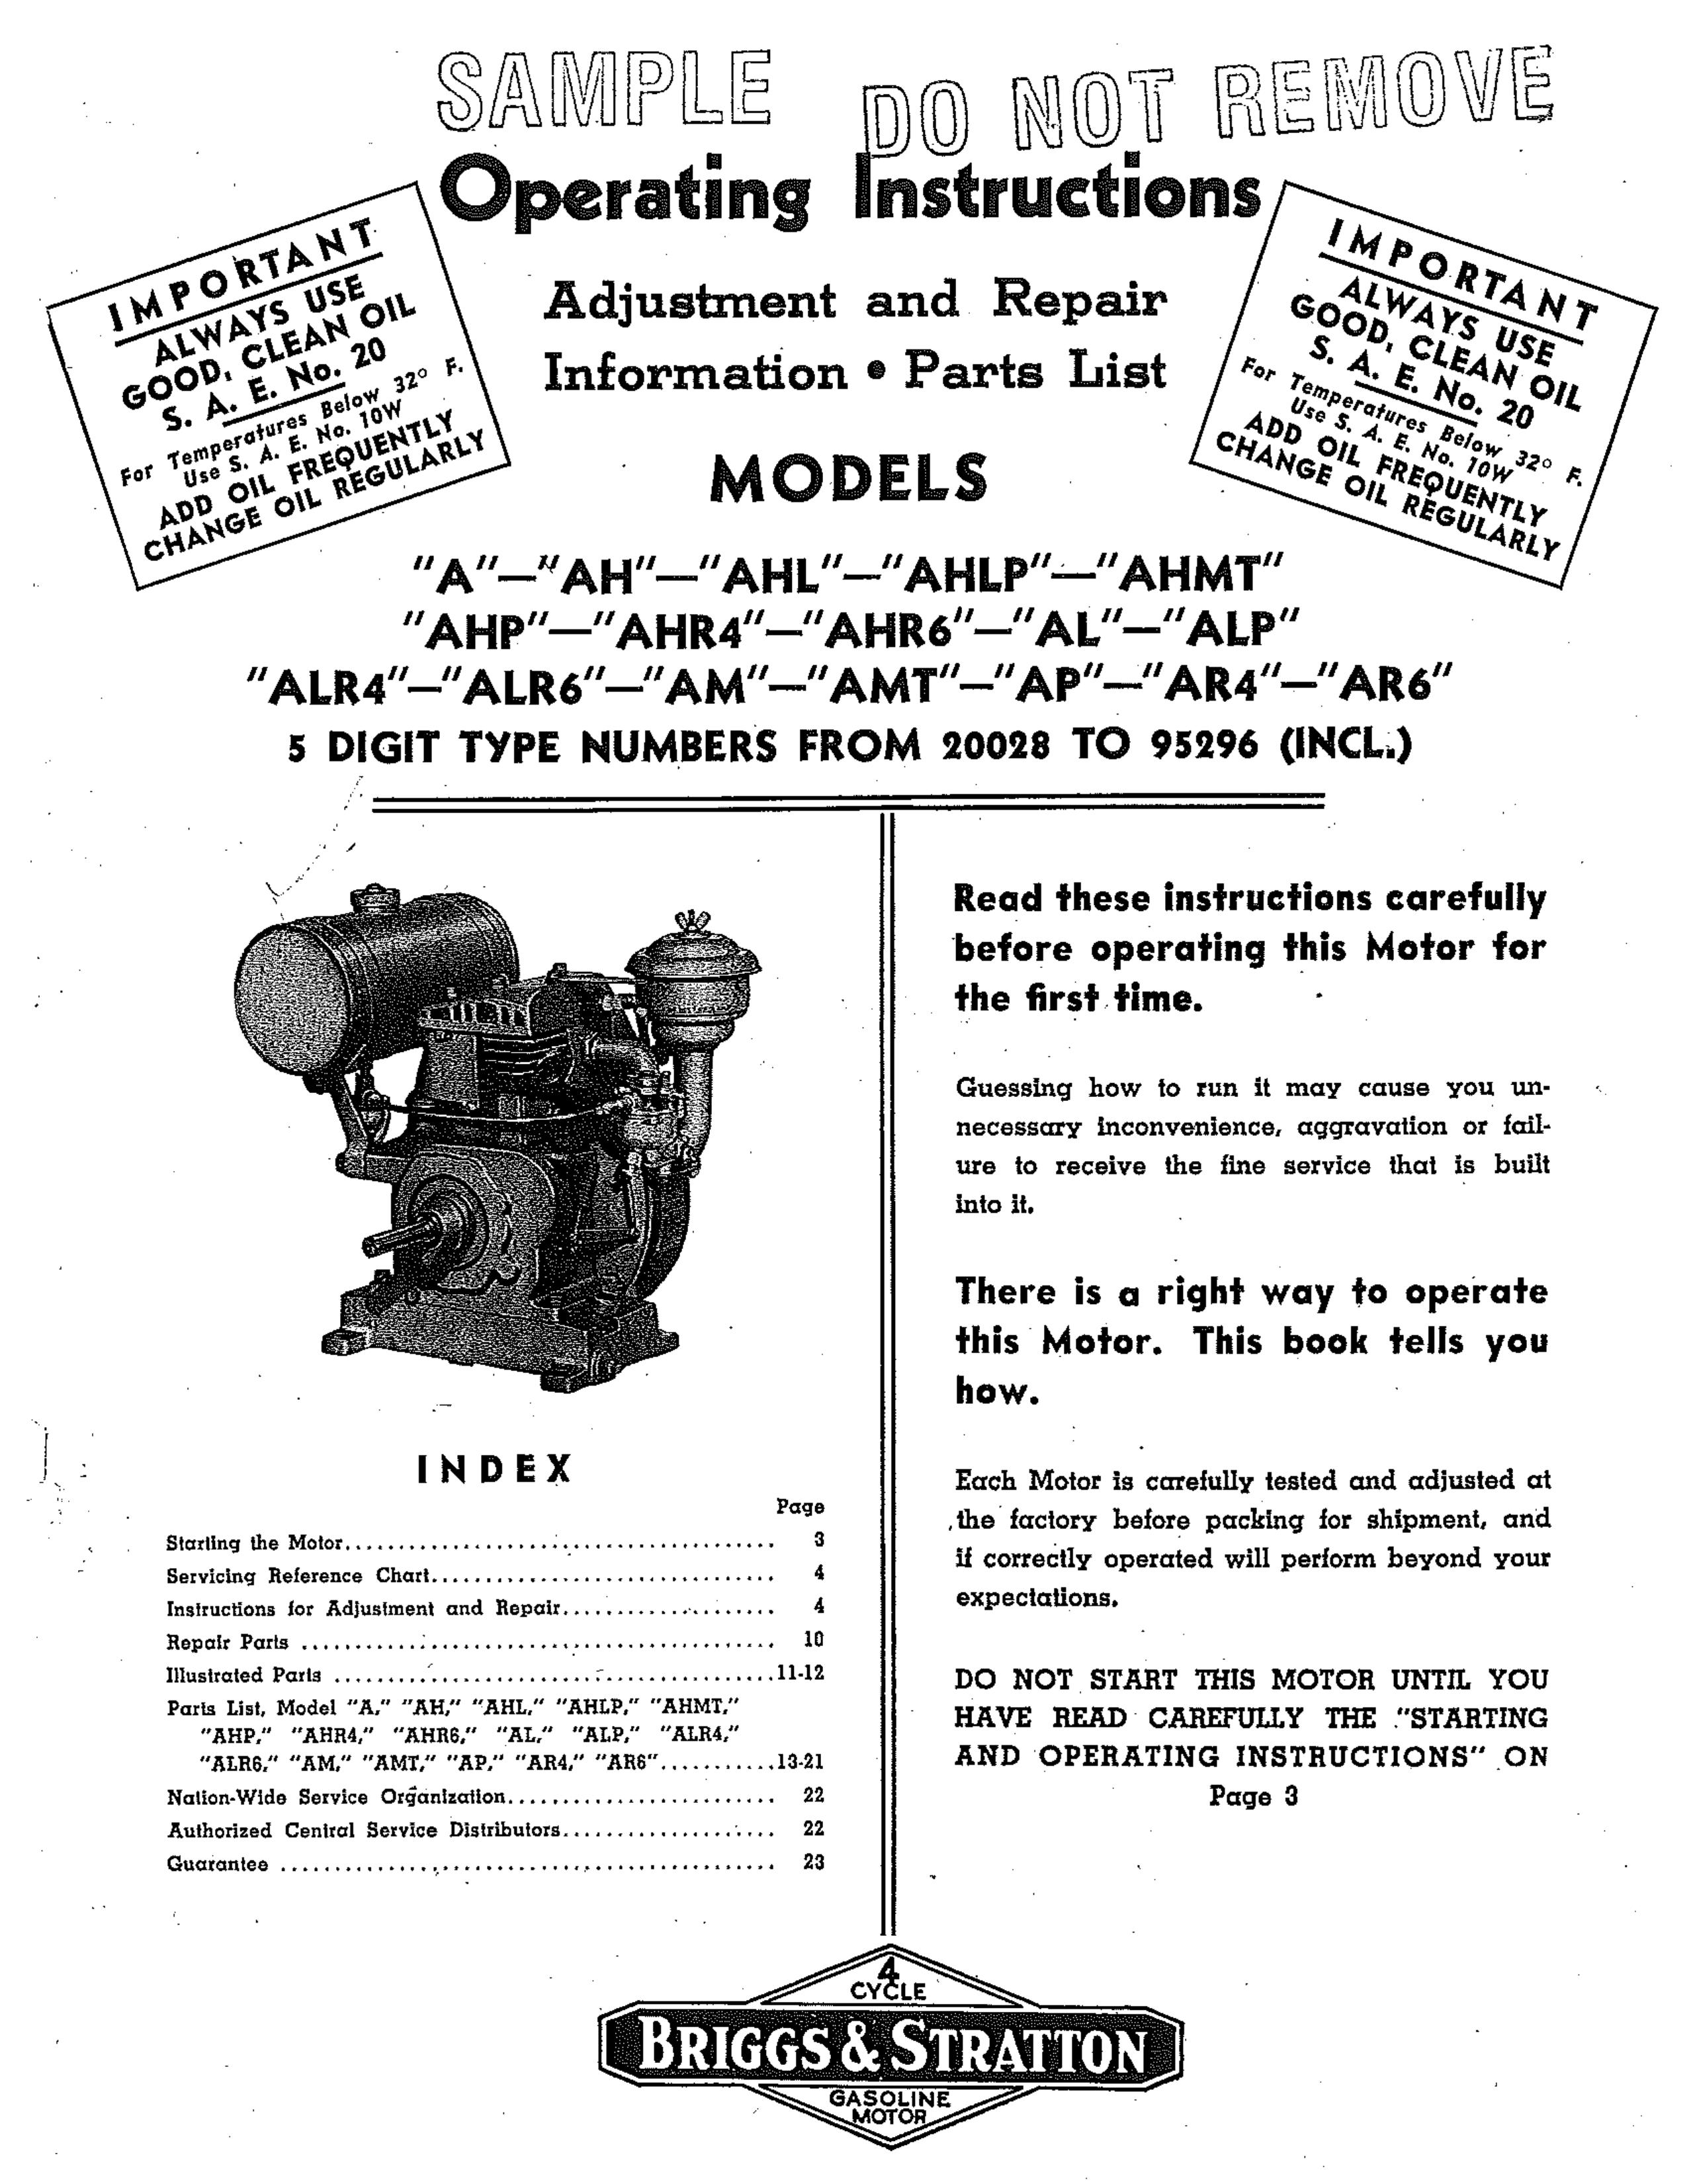 Briggs & Stratton ALR6 Outboard Motor User Manual